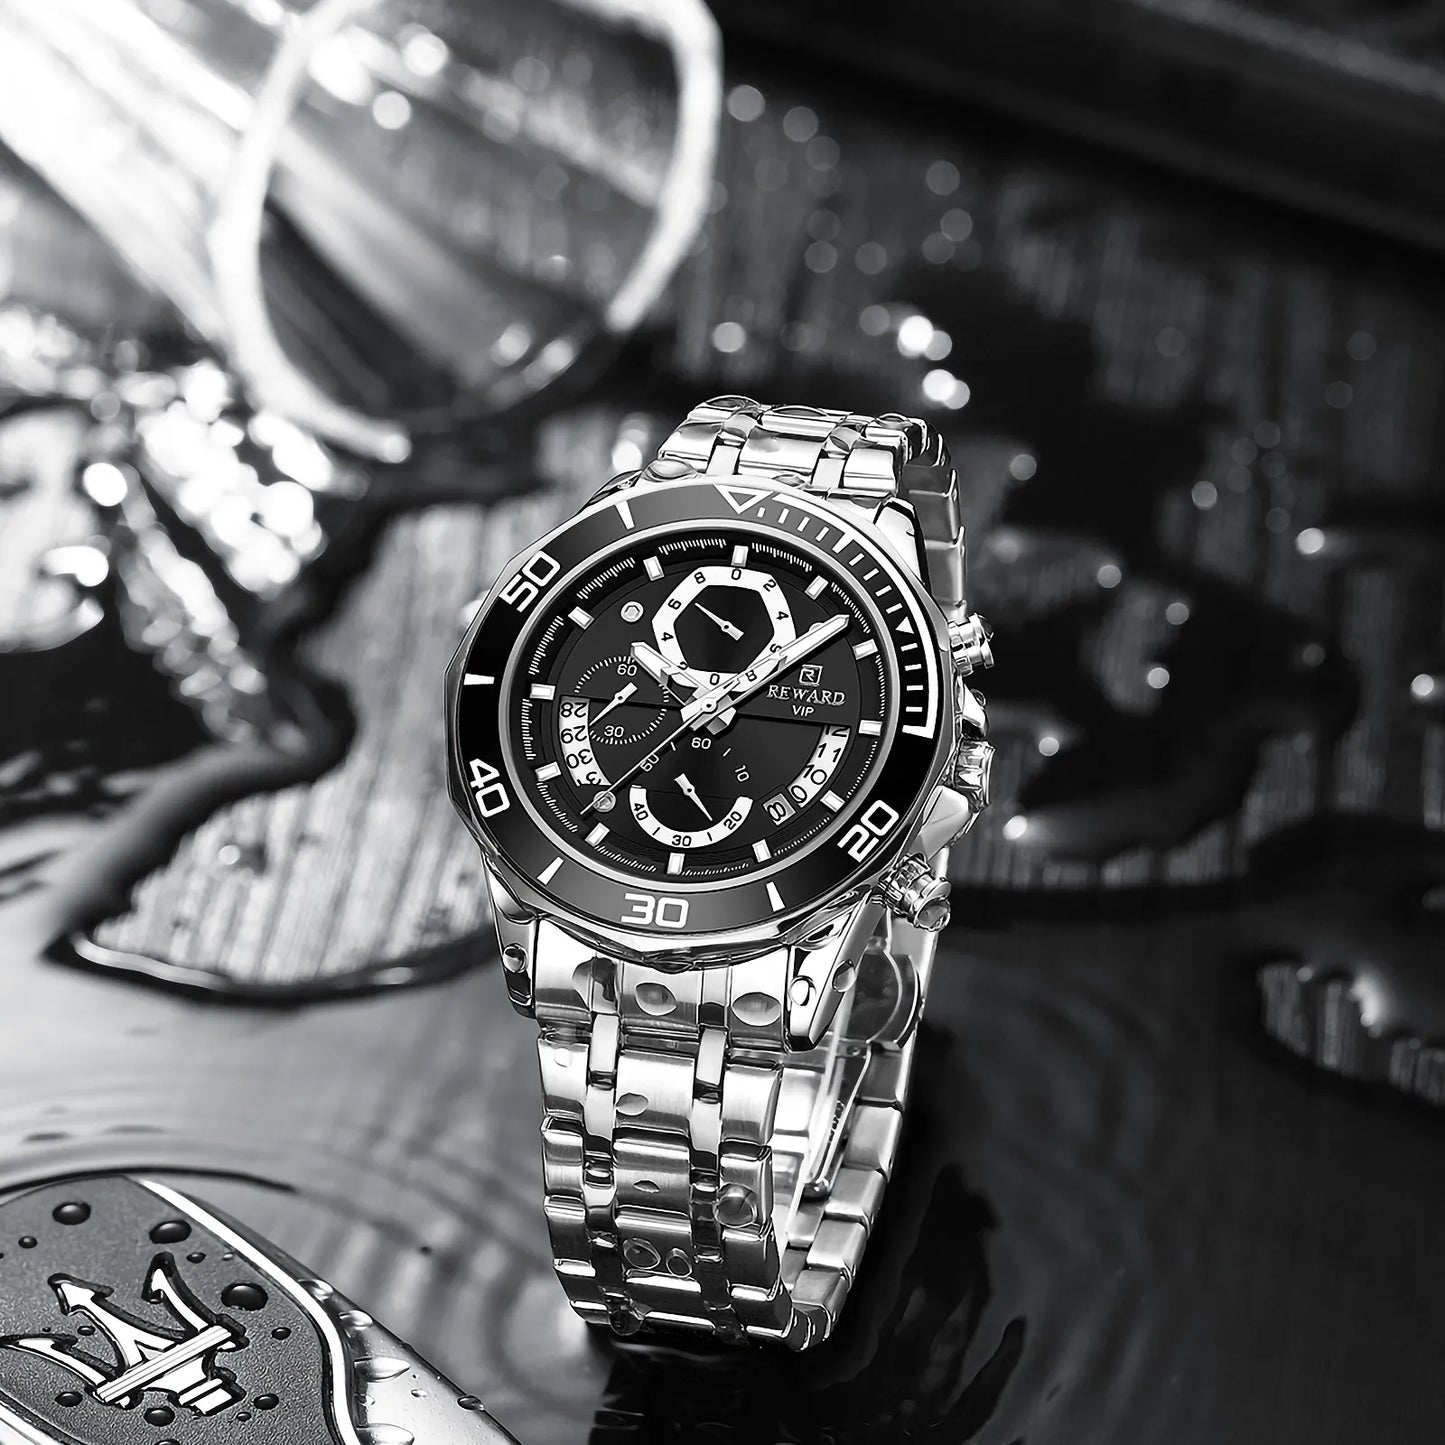 Nitro Multifunction Watch Steel, Silver Black colour